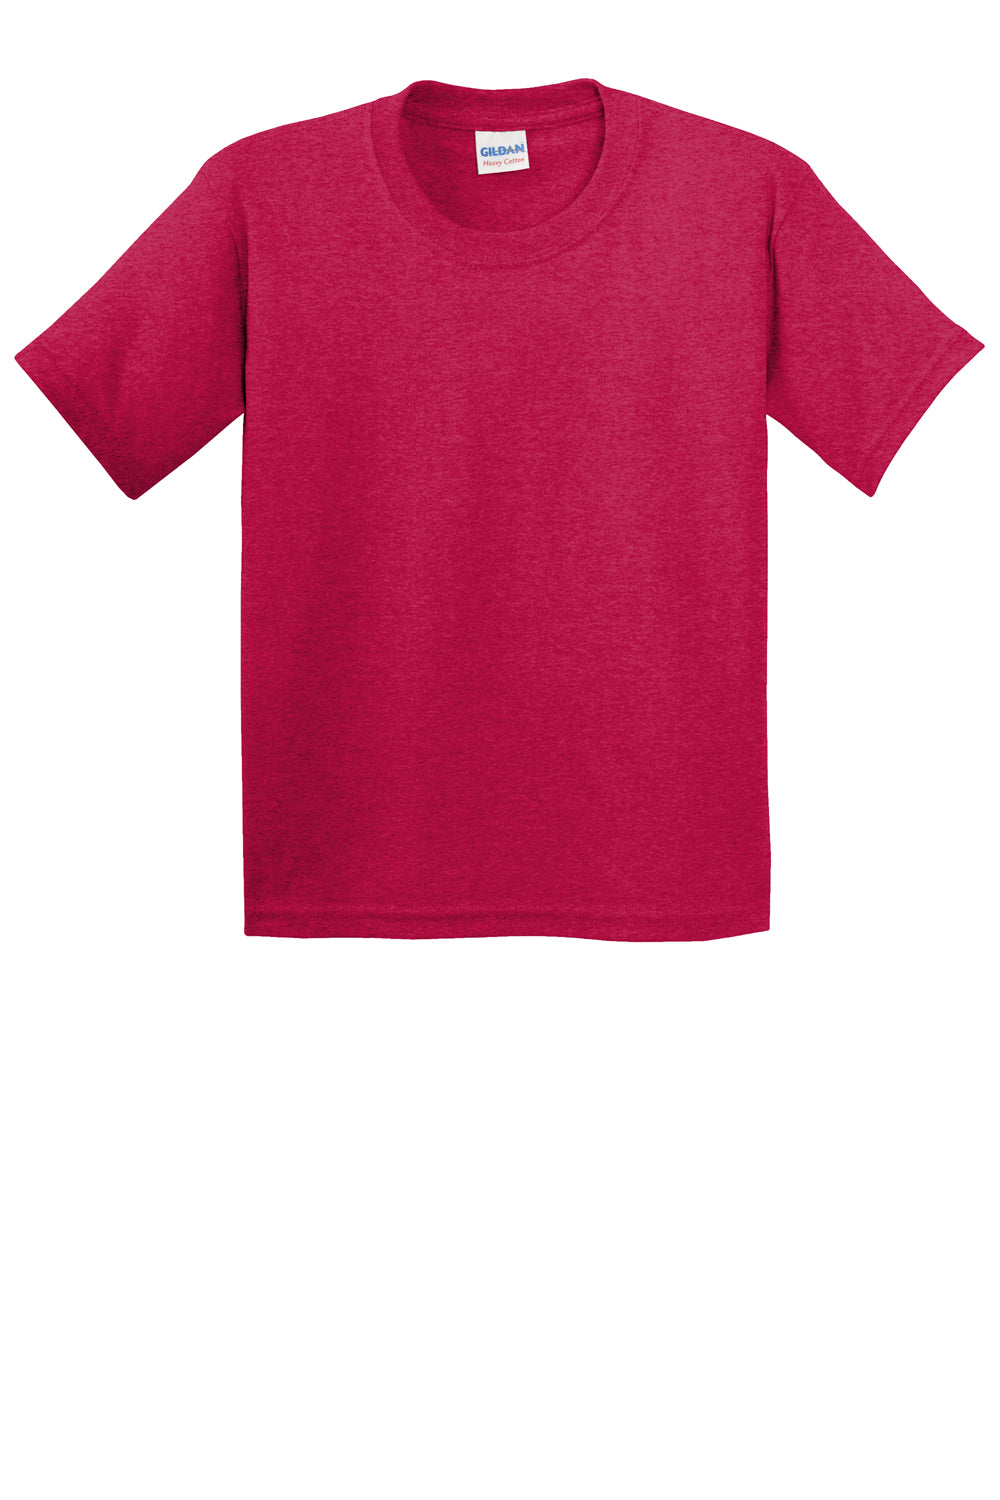 Gildan Youth Short Sleeve Crewneck T-Shirt Heather Red Flat Front